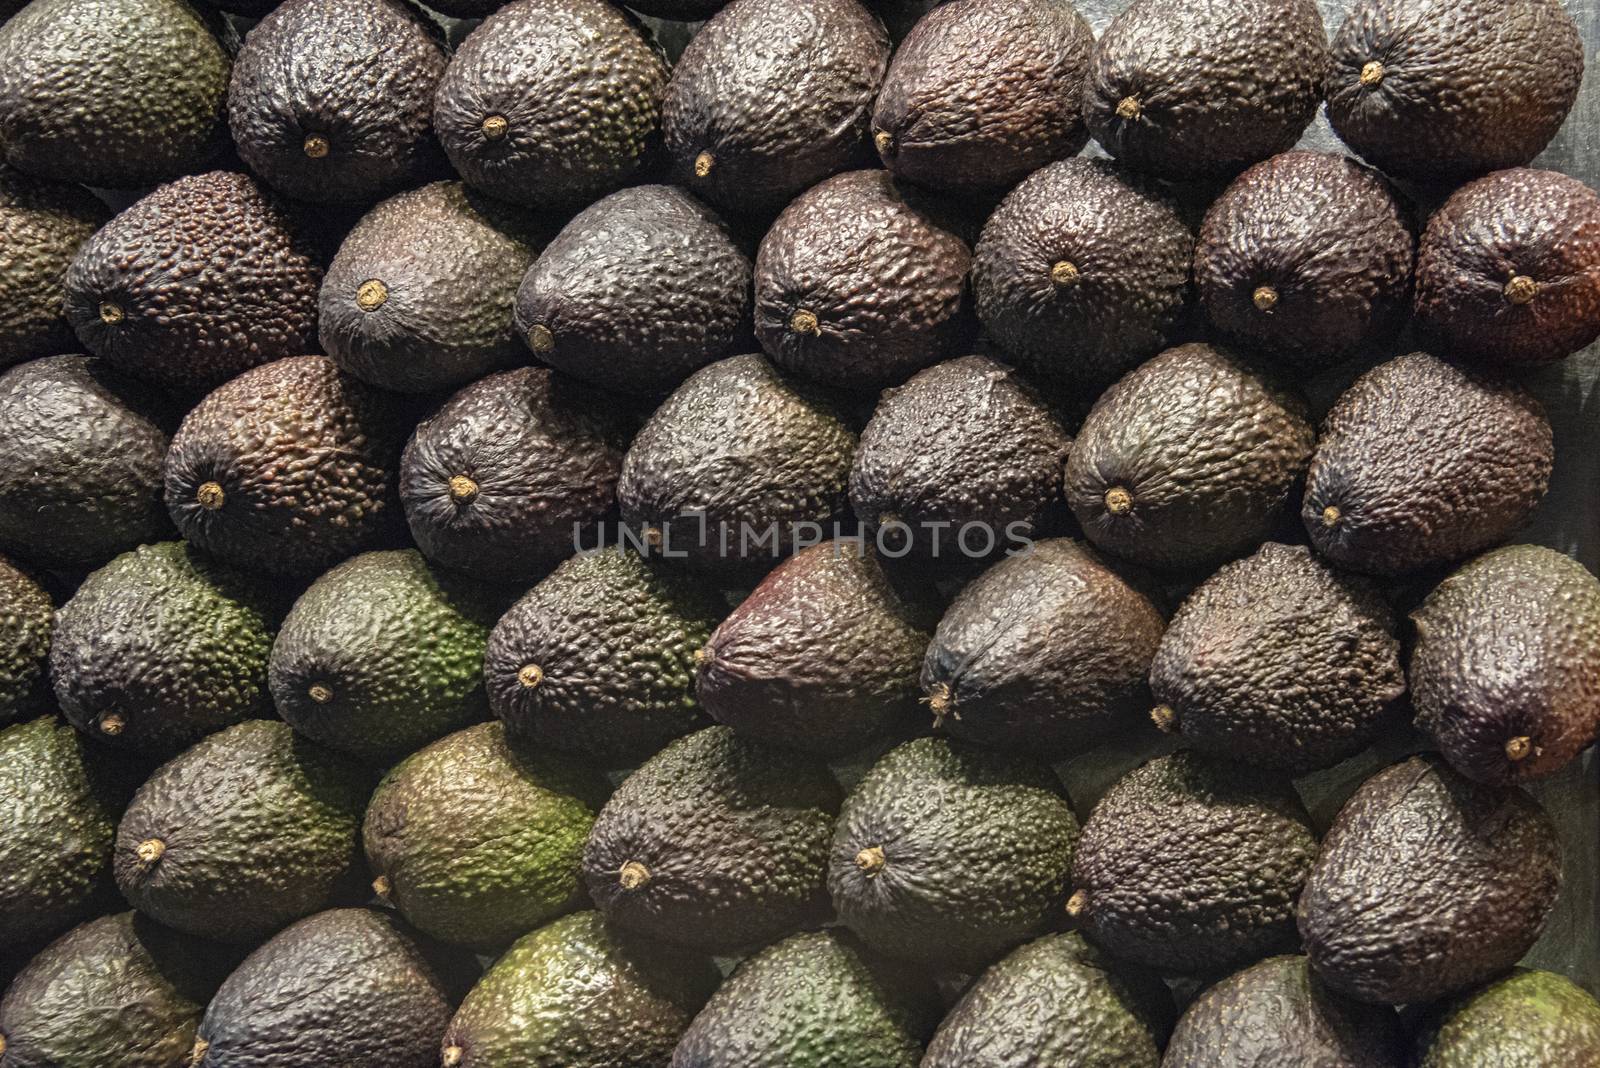 Spain, Barcelona - May 2018: Wall of stacked avocado pears